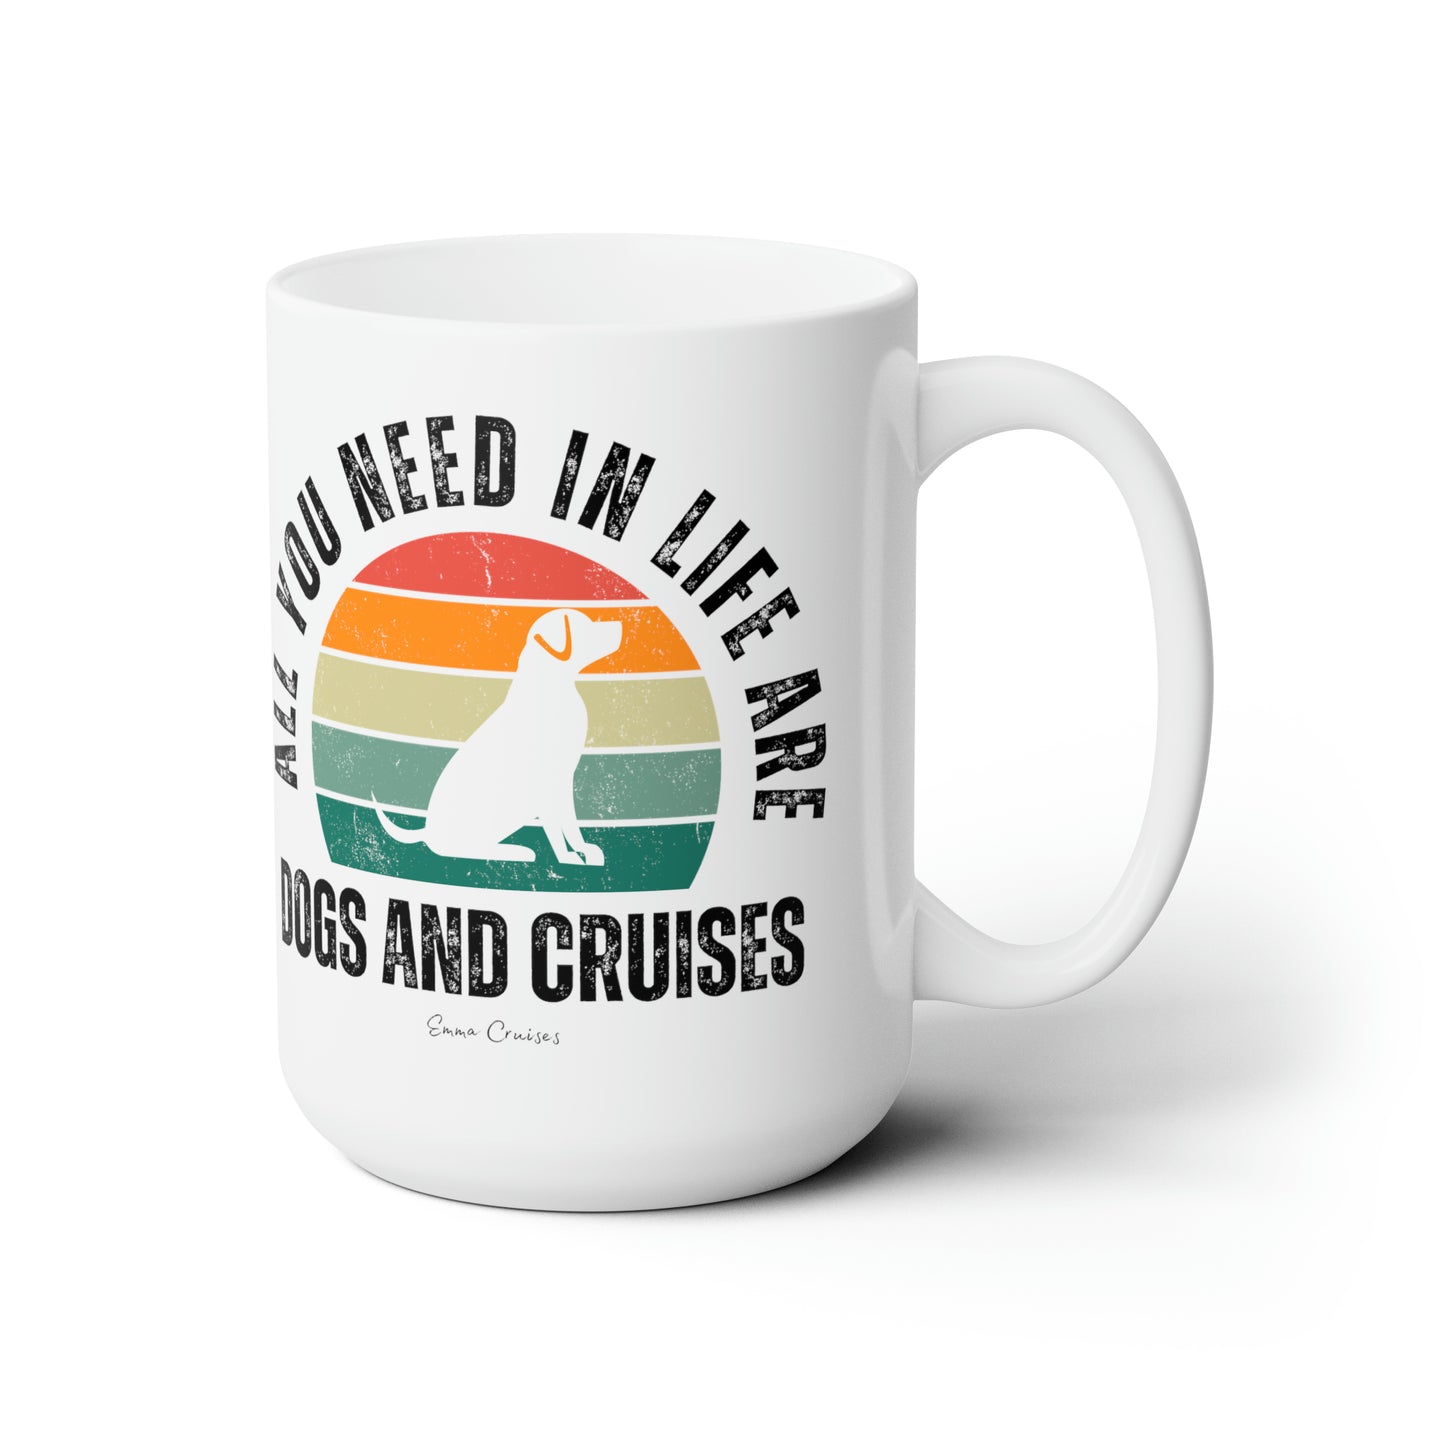 Dogs and Cruises - Ceramic Mug